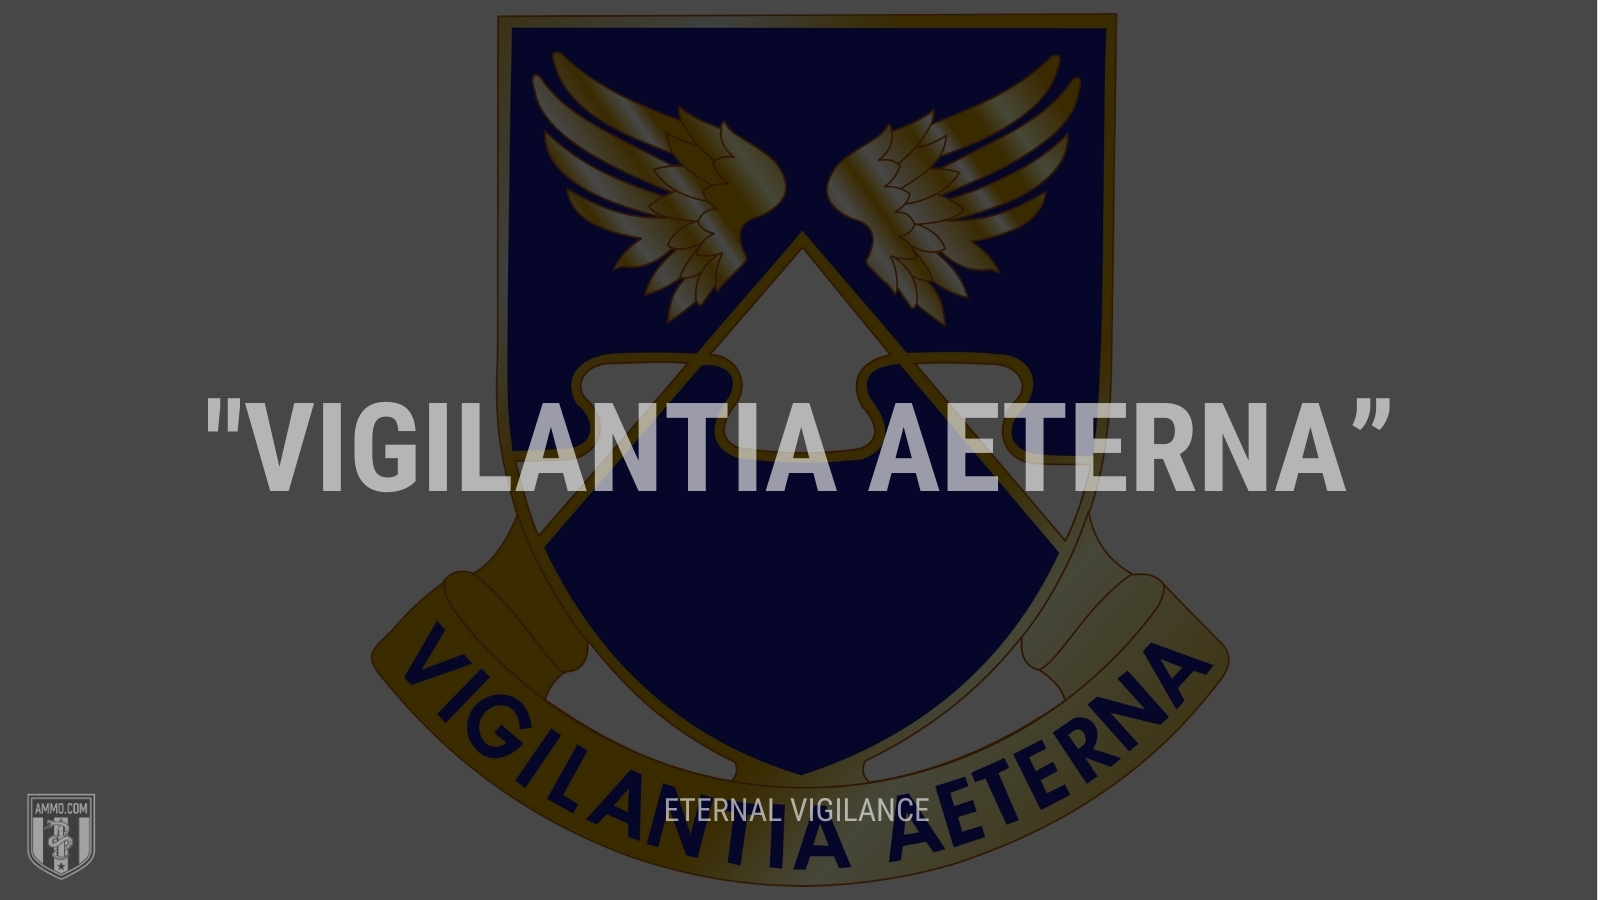 “Vigilantia aeterna” - Eternal vigilance